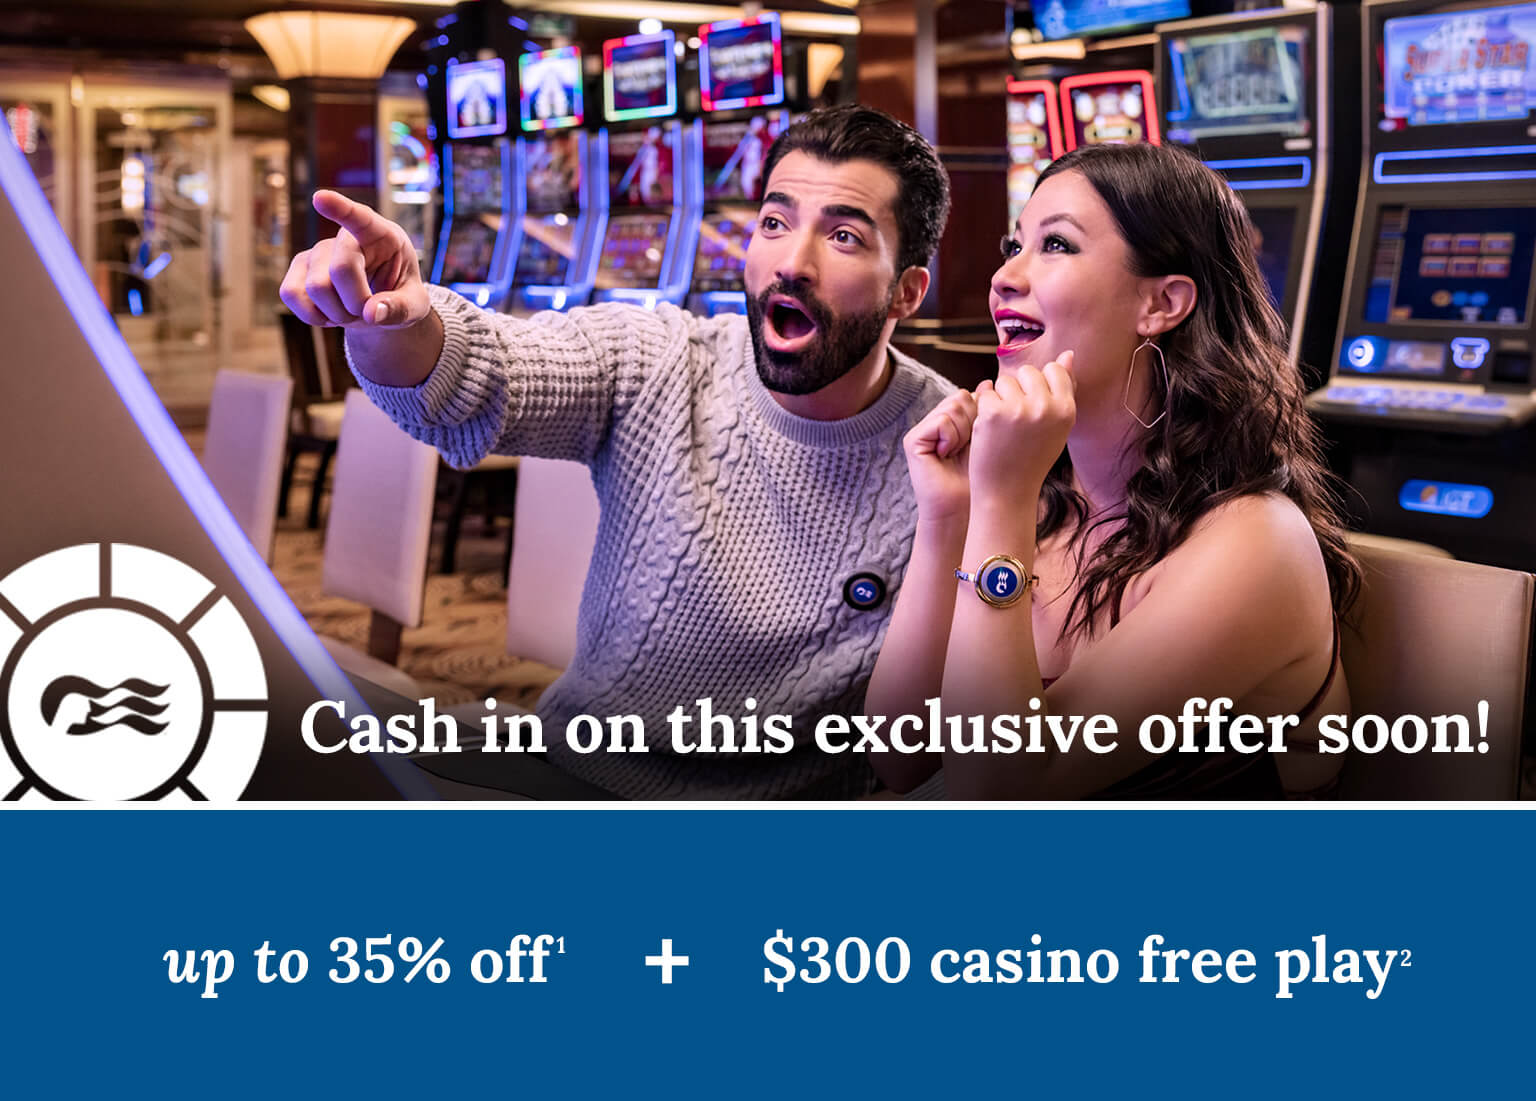 free balcony stateroom + $1000 casino free play + Princess Plus. Click here to book.